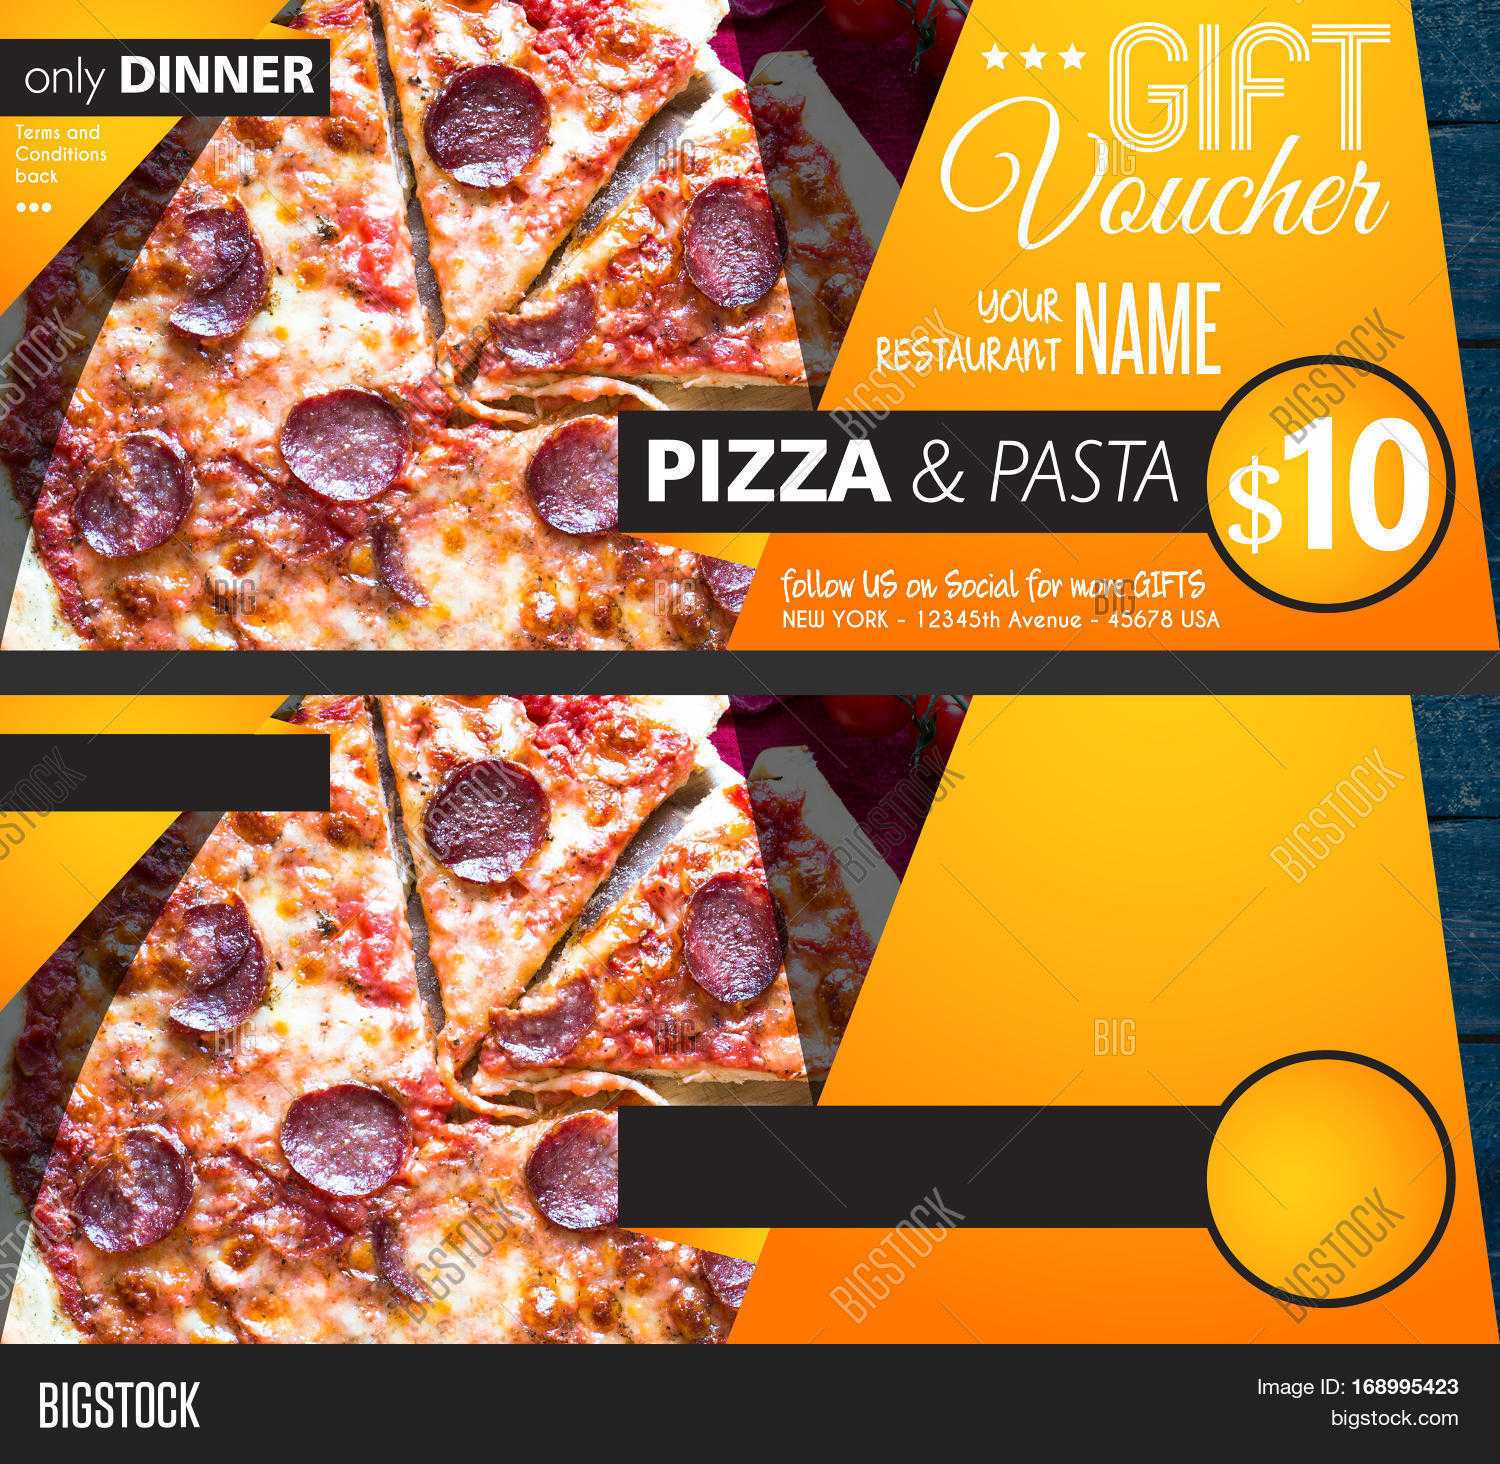 Restaurant Gift Image & Photo (Free Trial) | Bigstock Regarding Pizza Gift Certificate Template